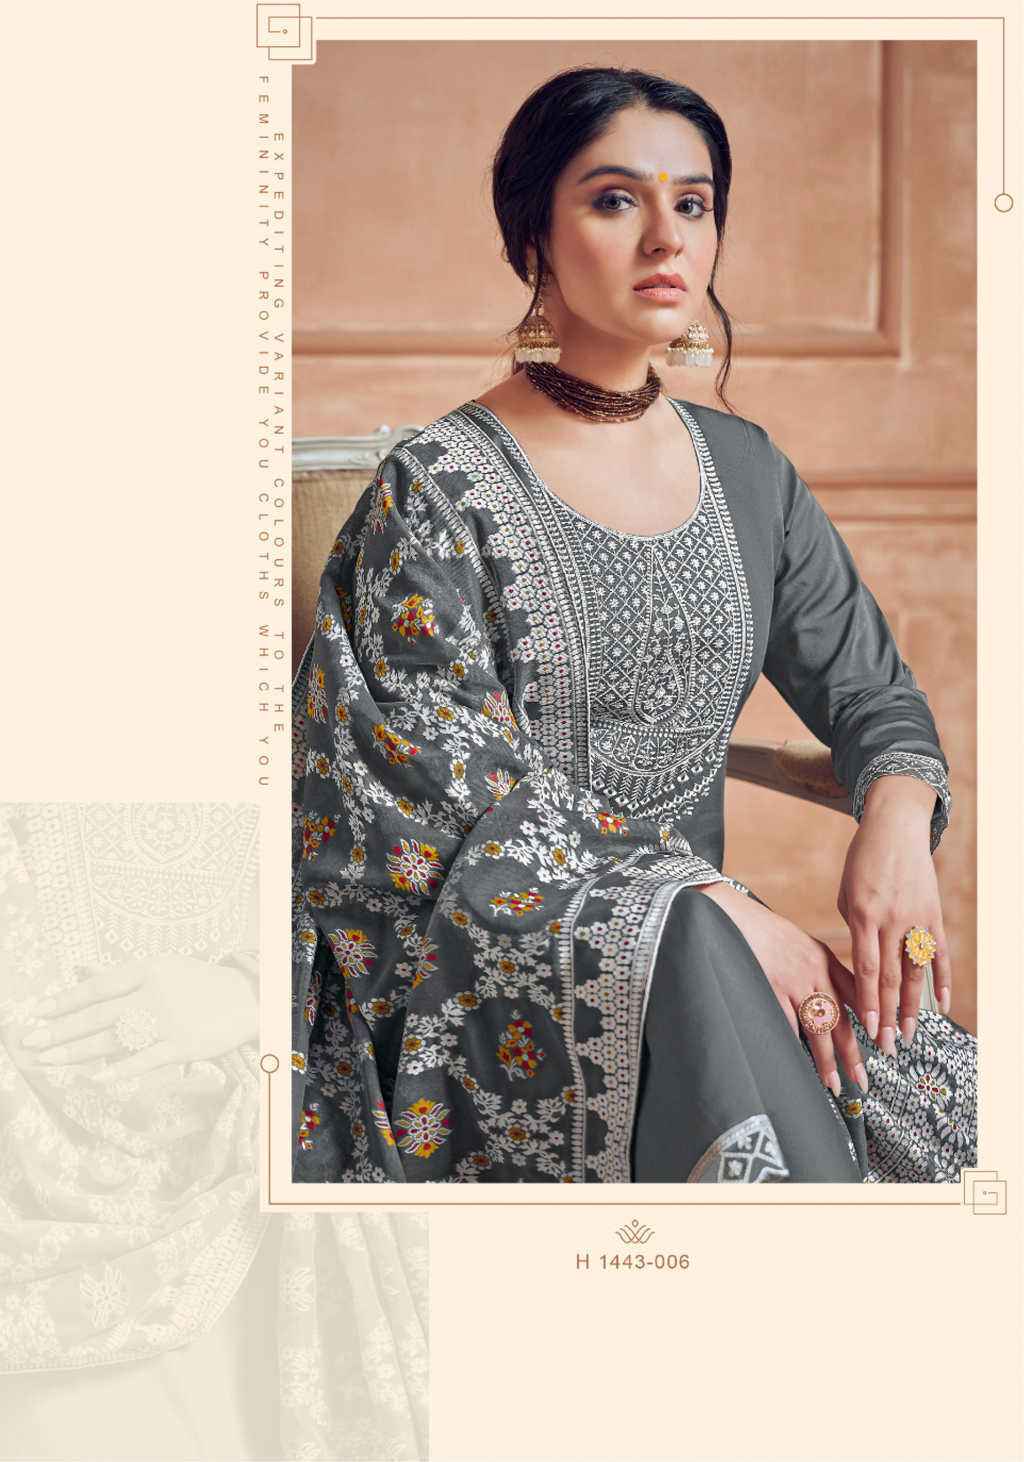 Buy Suhani Fashion Women's Georgette Lakhnavi Embroidery Salwar Suit Dress  Material (Faux Georgette, Khaki) at Amazon.in